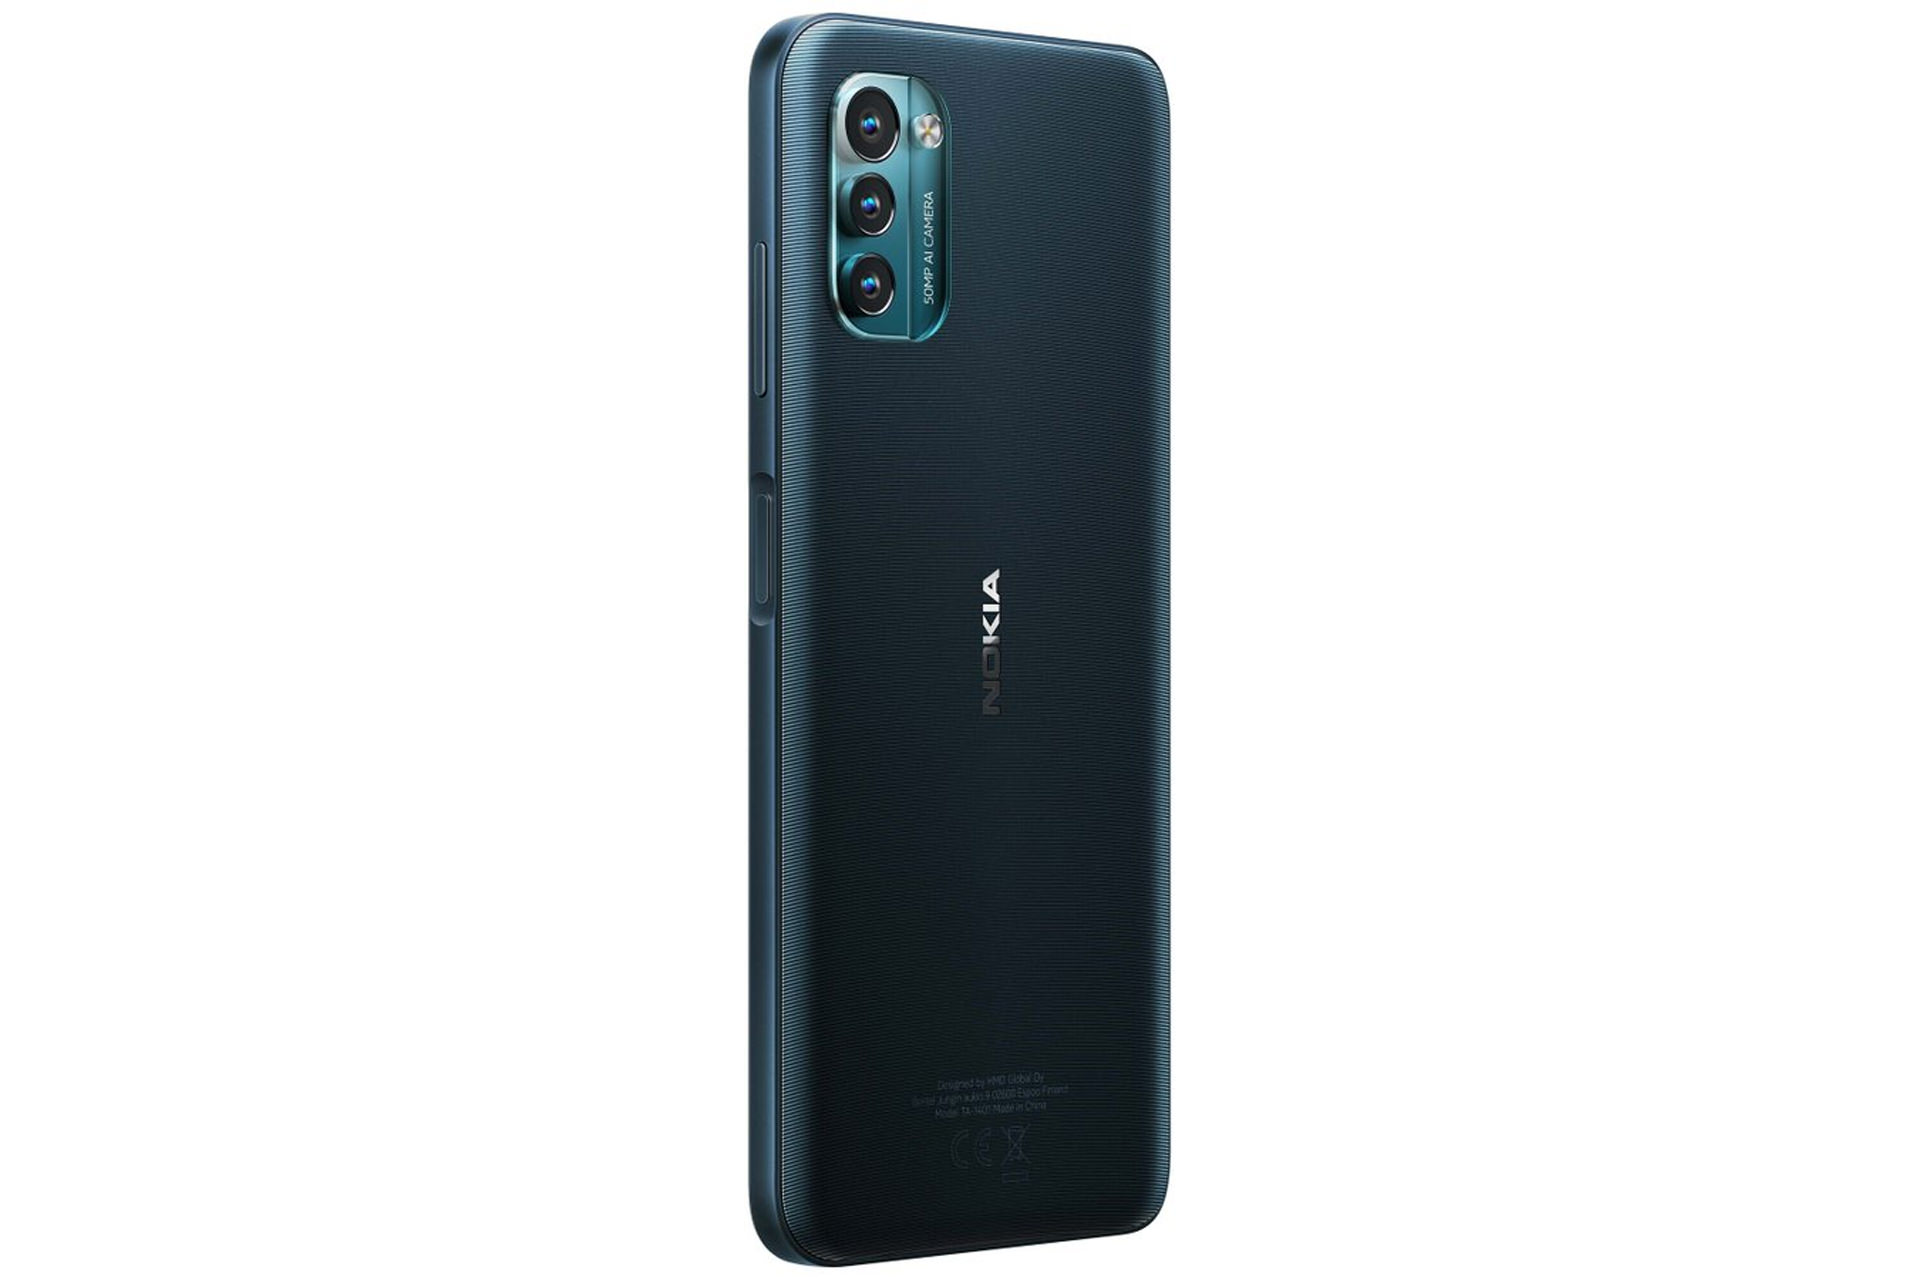 Rear view of Nokia G21 Revealed dark green